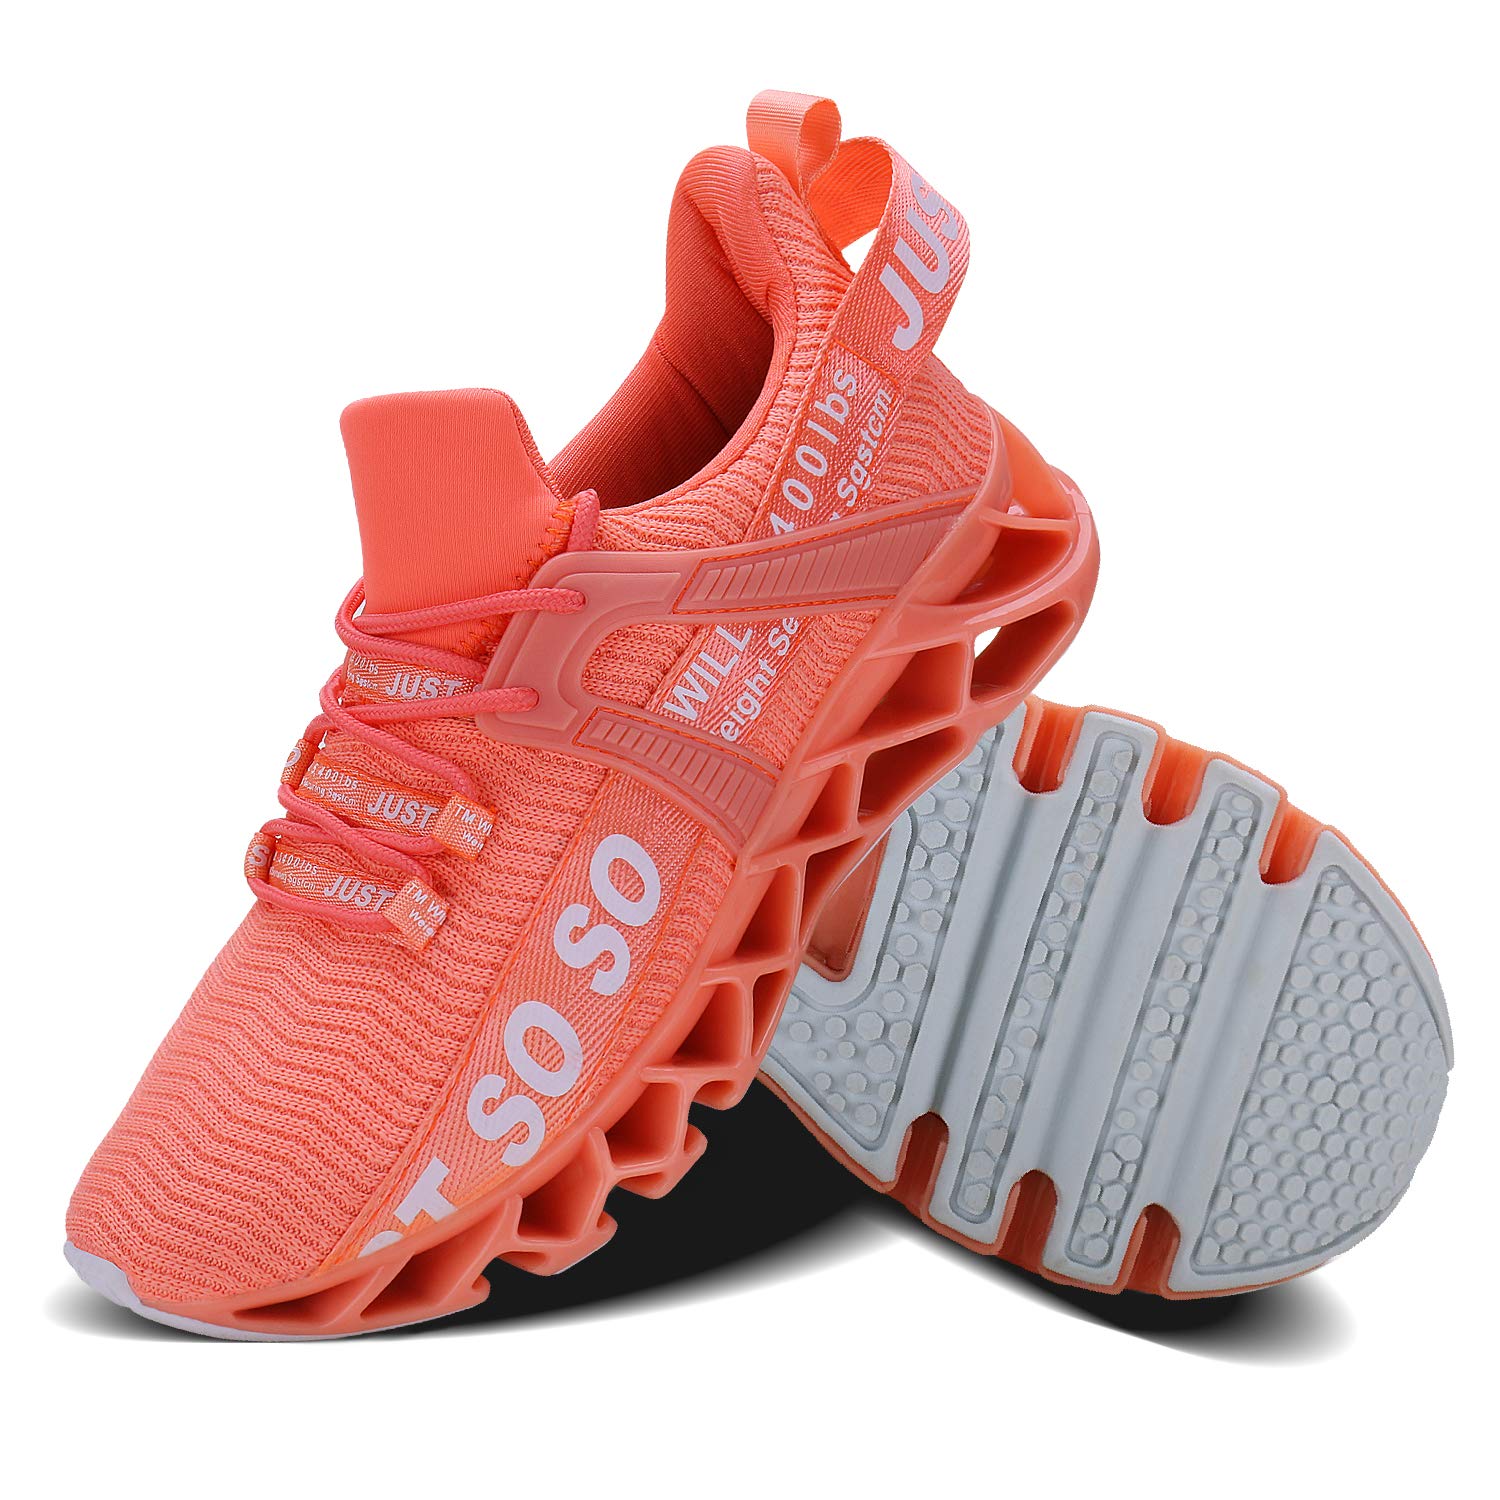 UMYOGO Women's Running Shoes Non Slip Athletic Tennis Walking Blade Type Sneakers